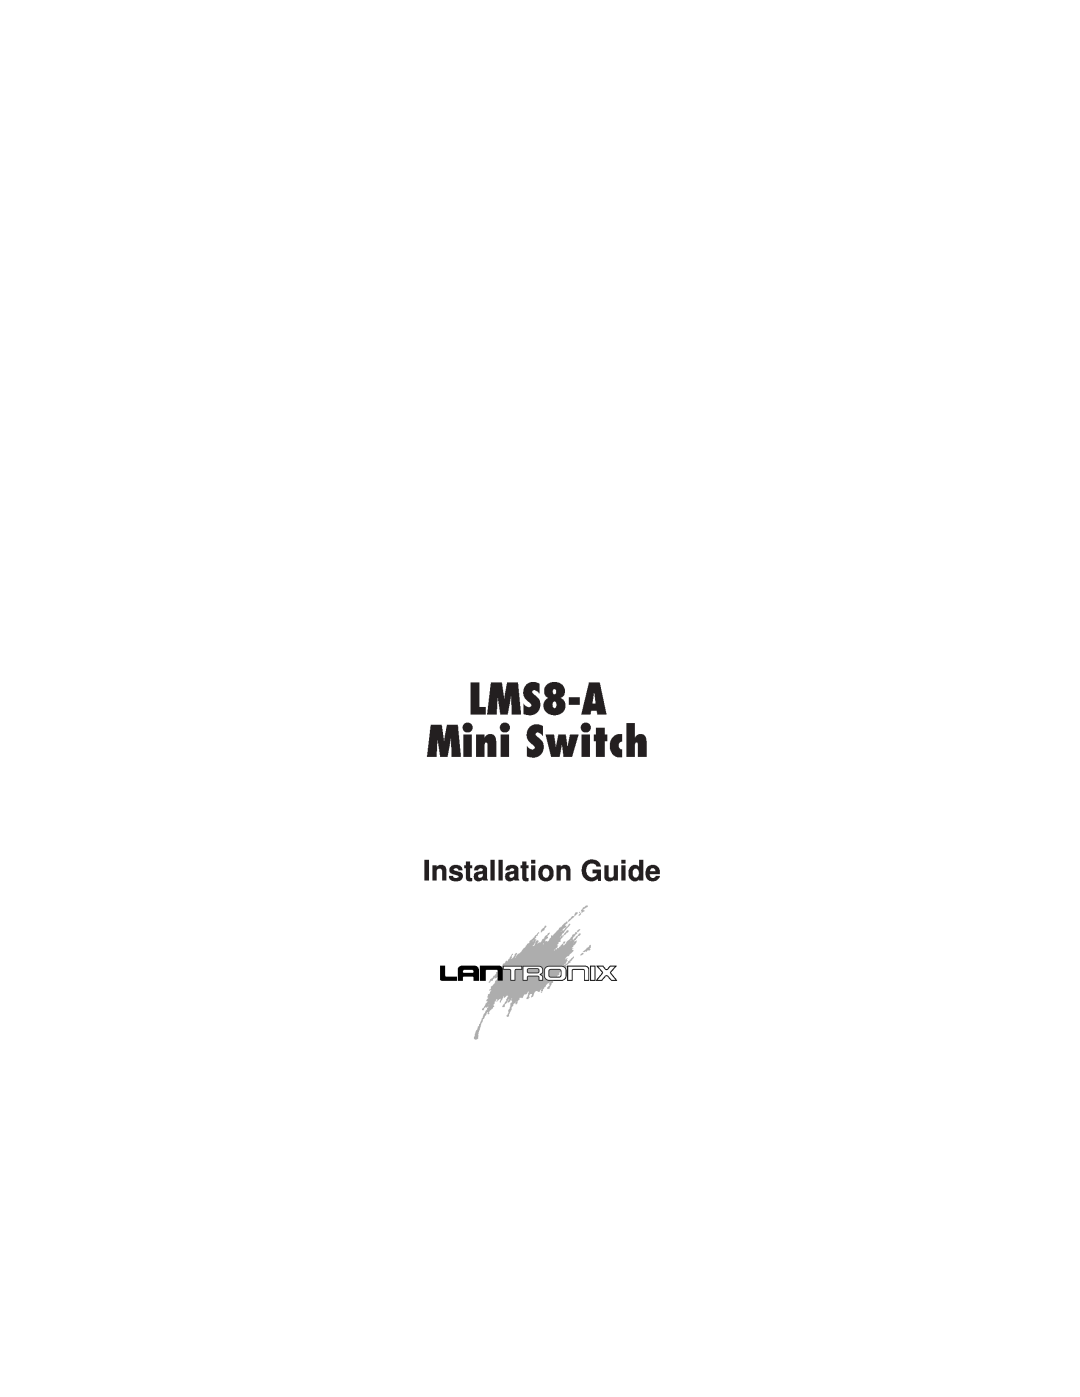 Lantronix manual LMS8-A Mini Switch, Installation Guide 